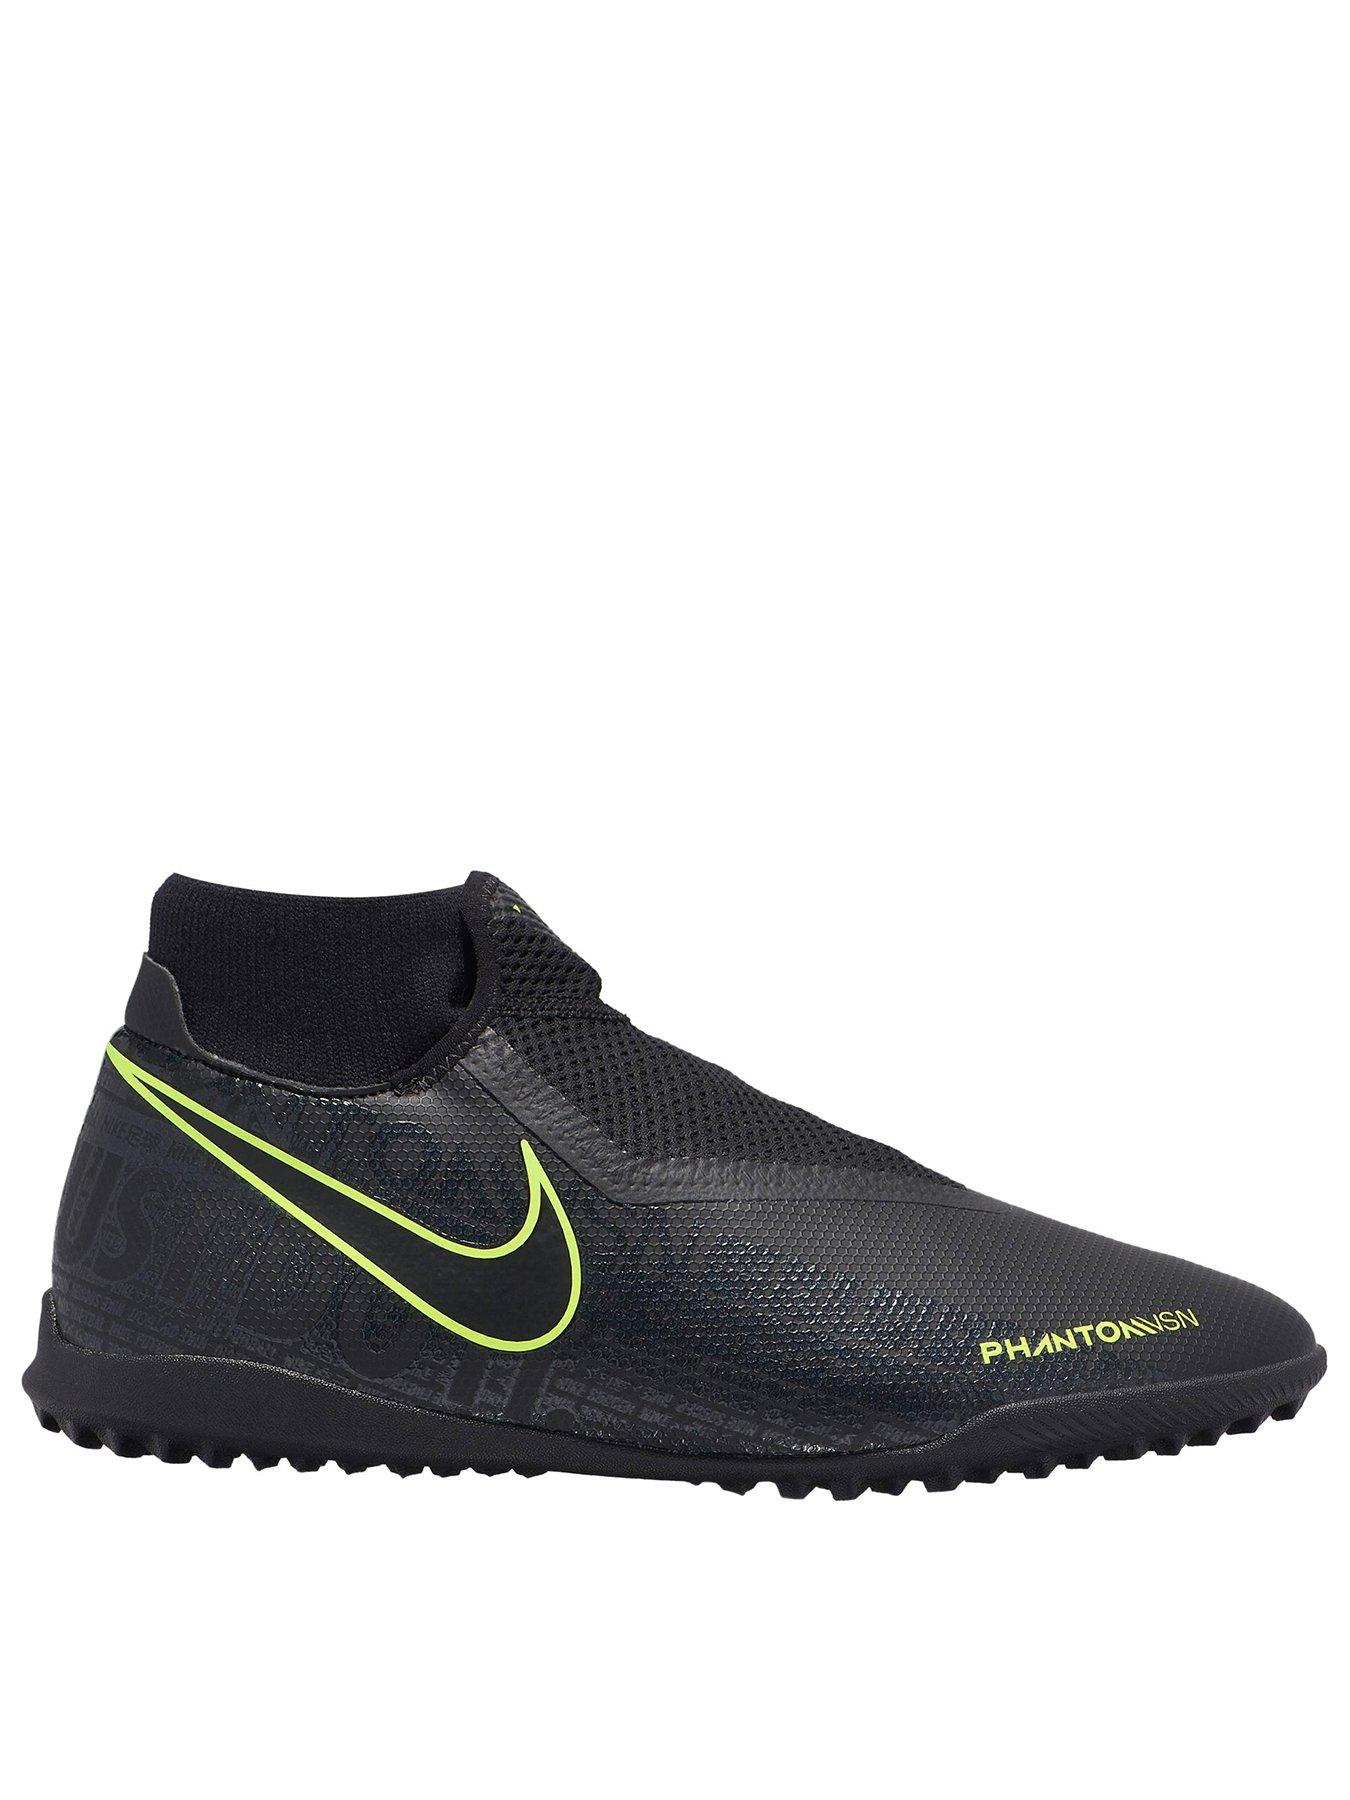 Nike Phantom Vision Academy Artificial Turf Football Boots .